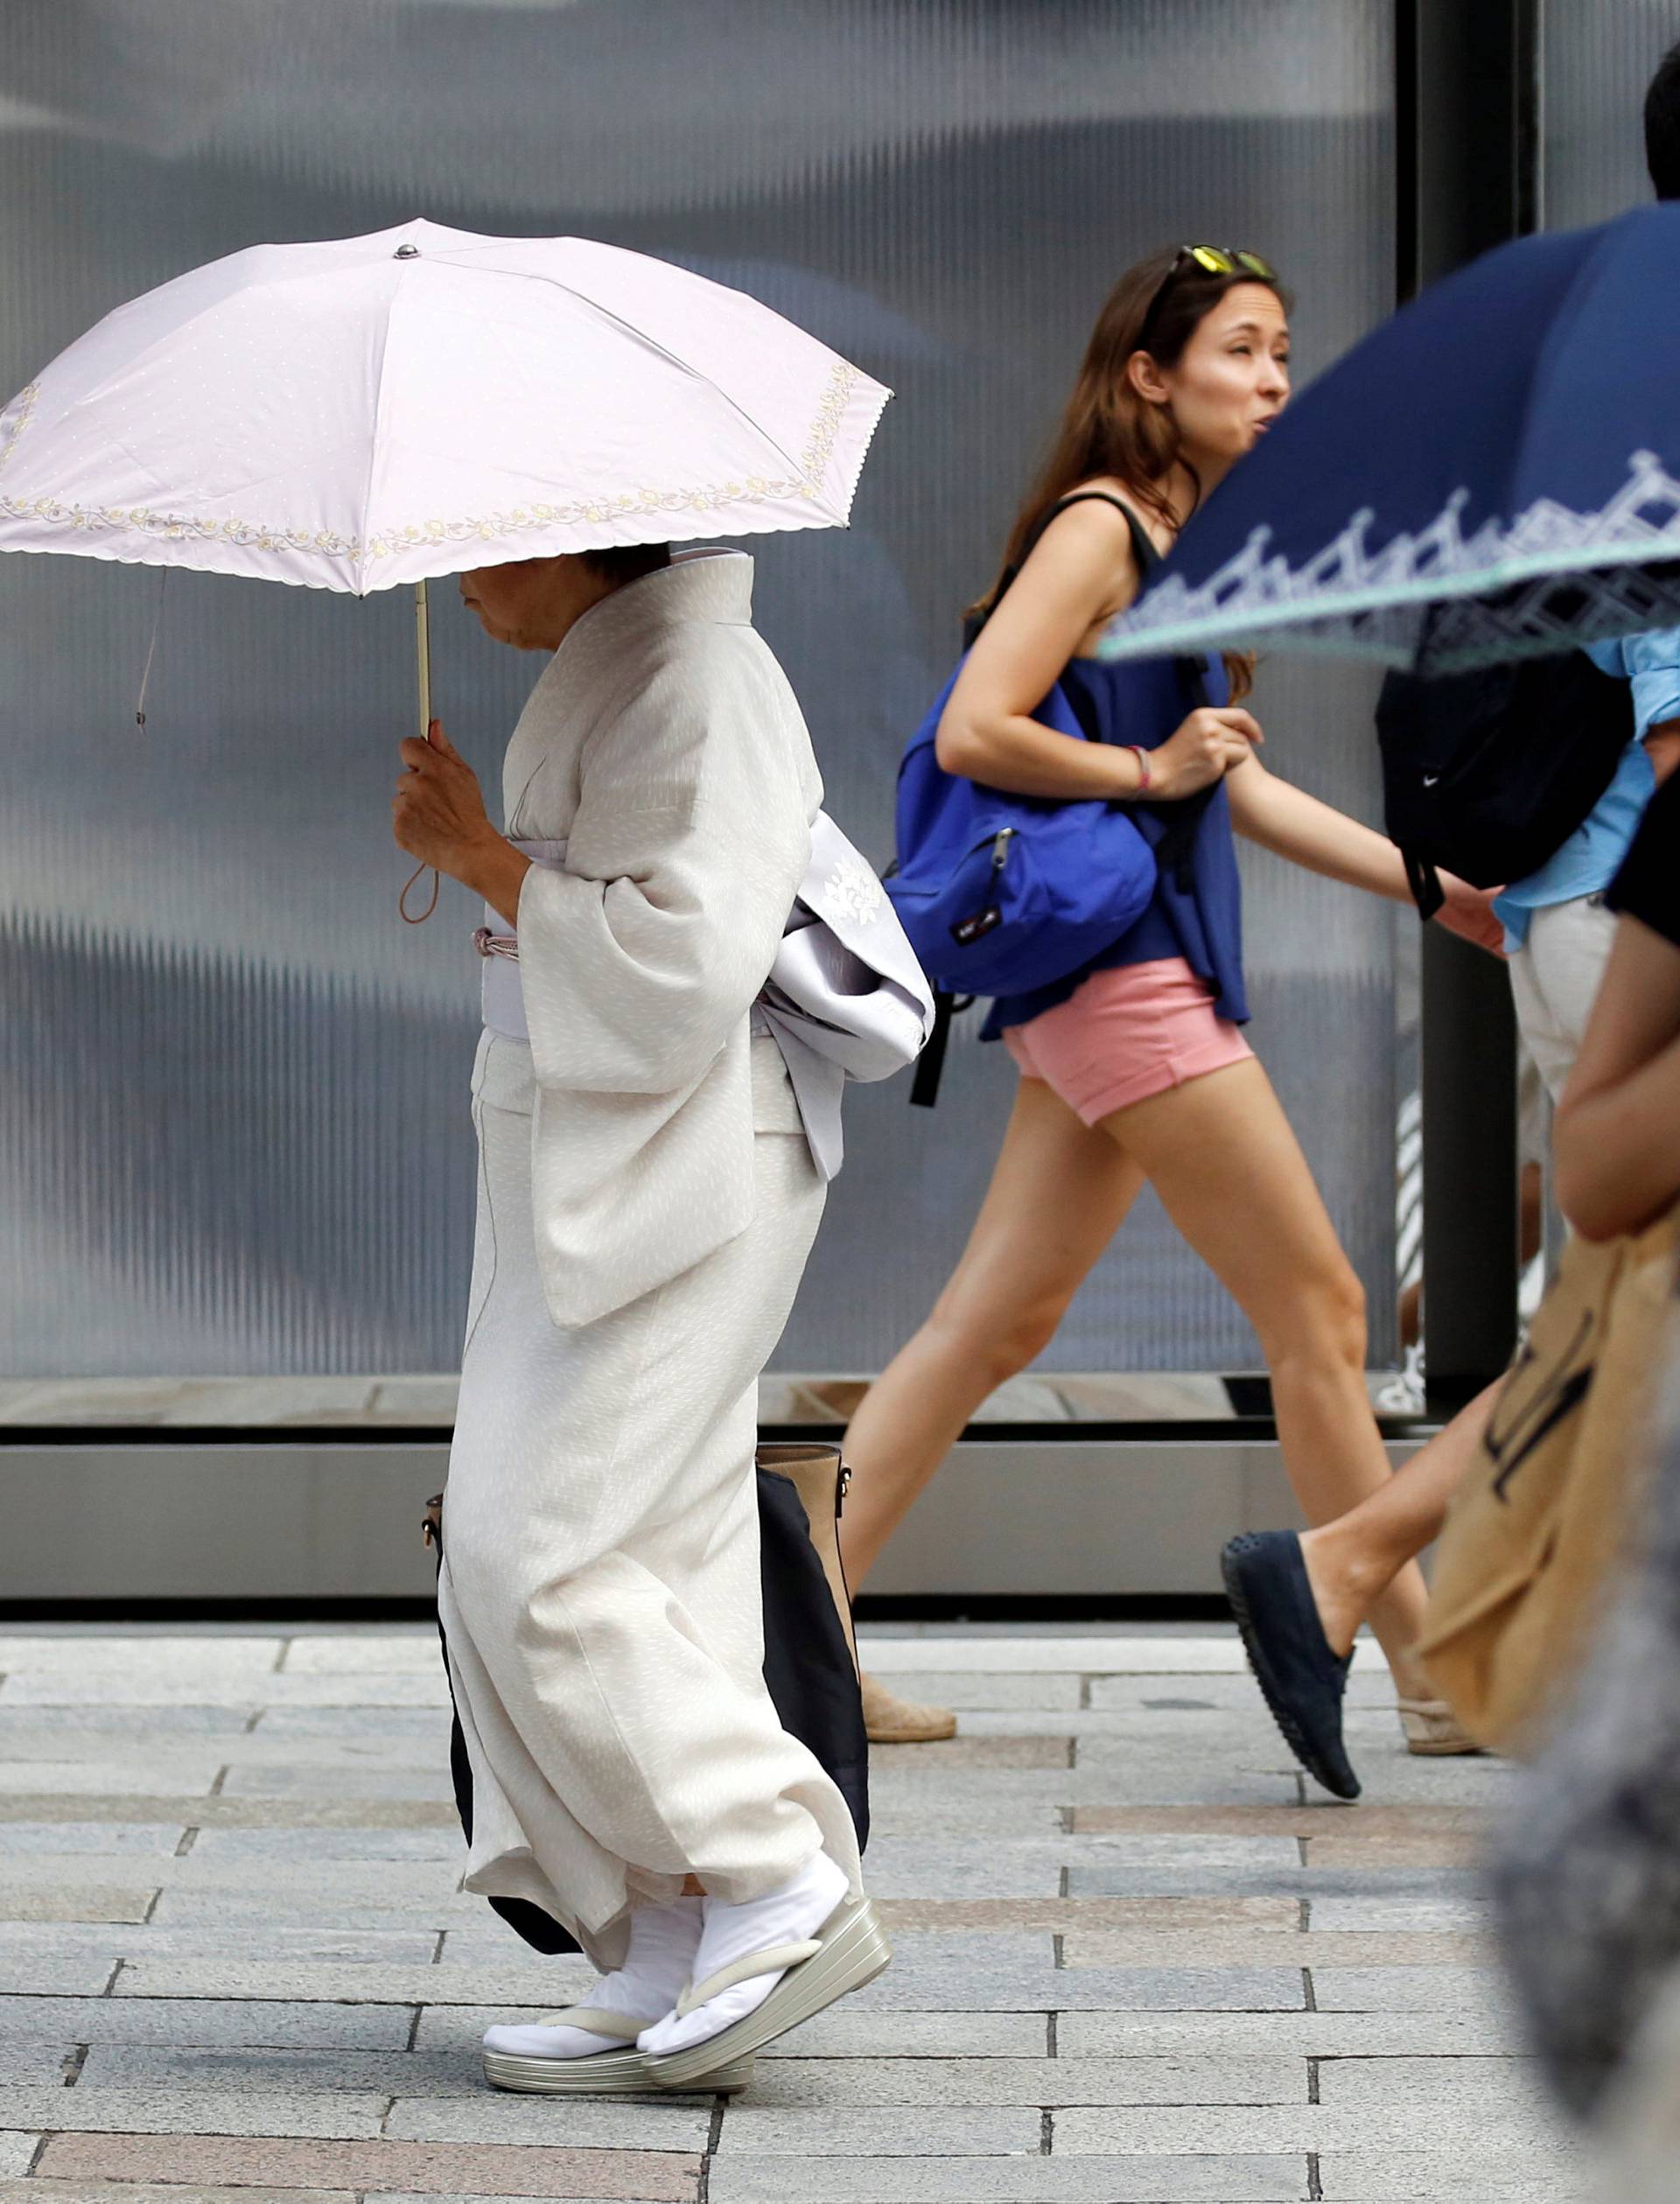 A kimono-clad woman using a sun umbrella walks on a street during a heatwave in Tokyo